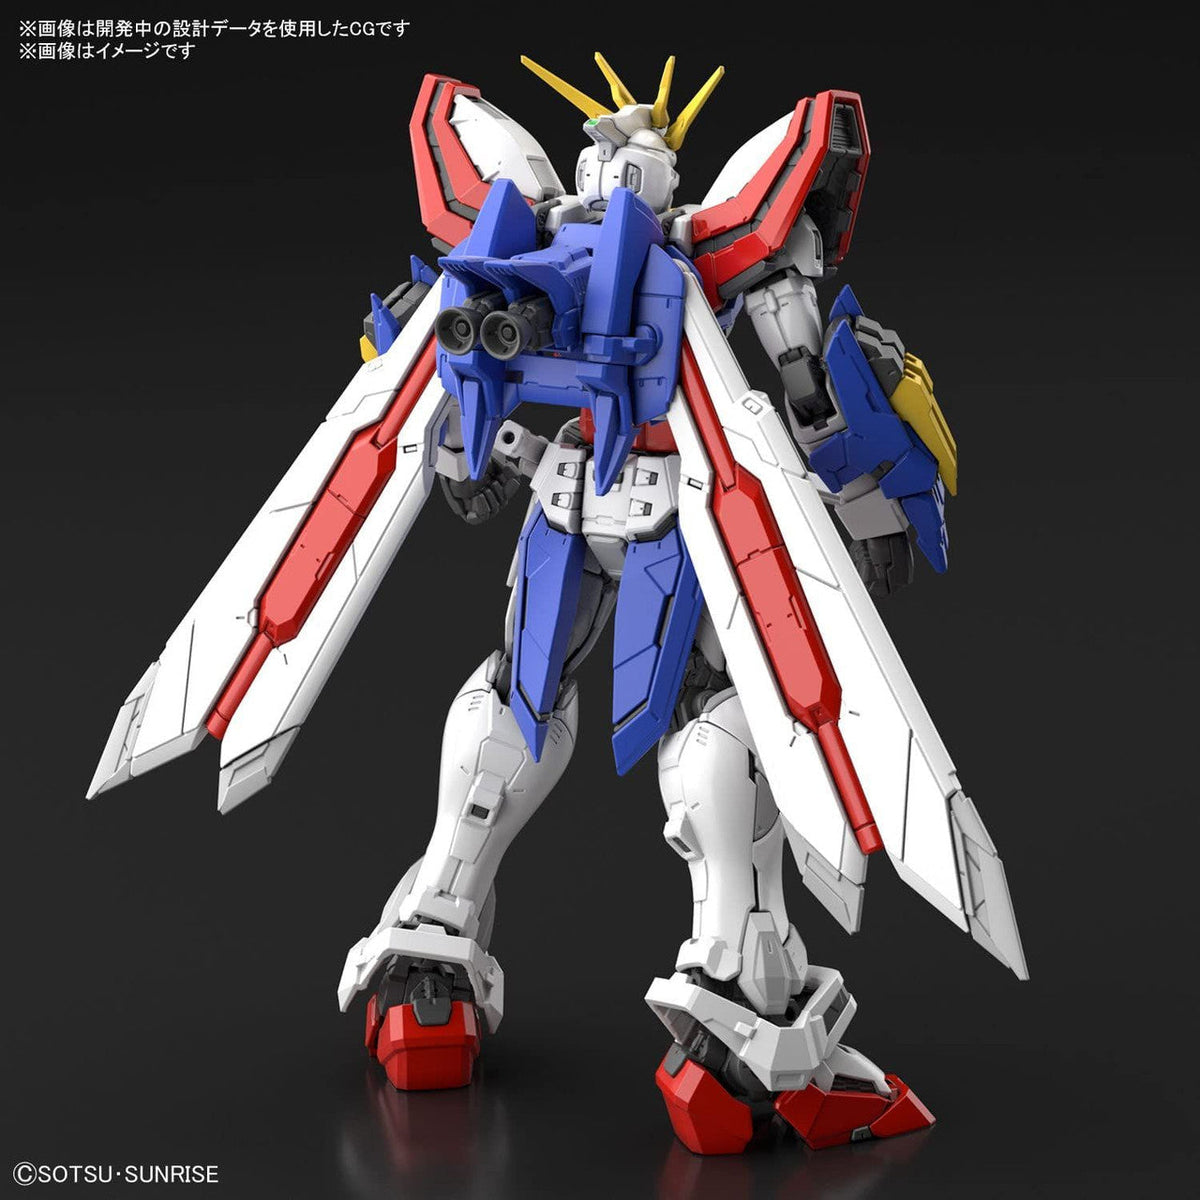 Gunpla RG 1/144 God Gundam-Bandai-Ace Cards &amp; Collectibles